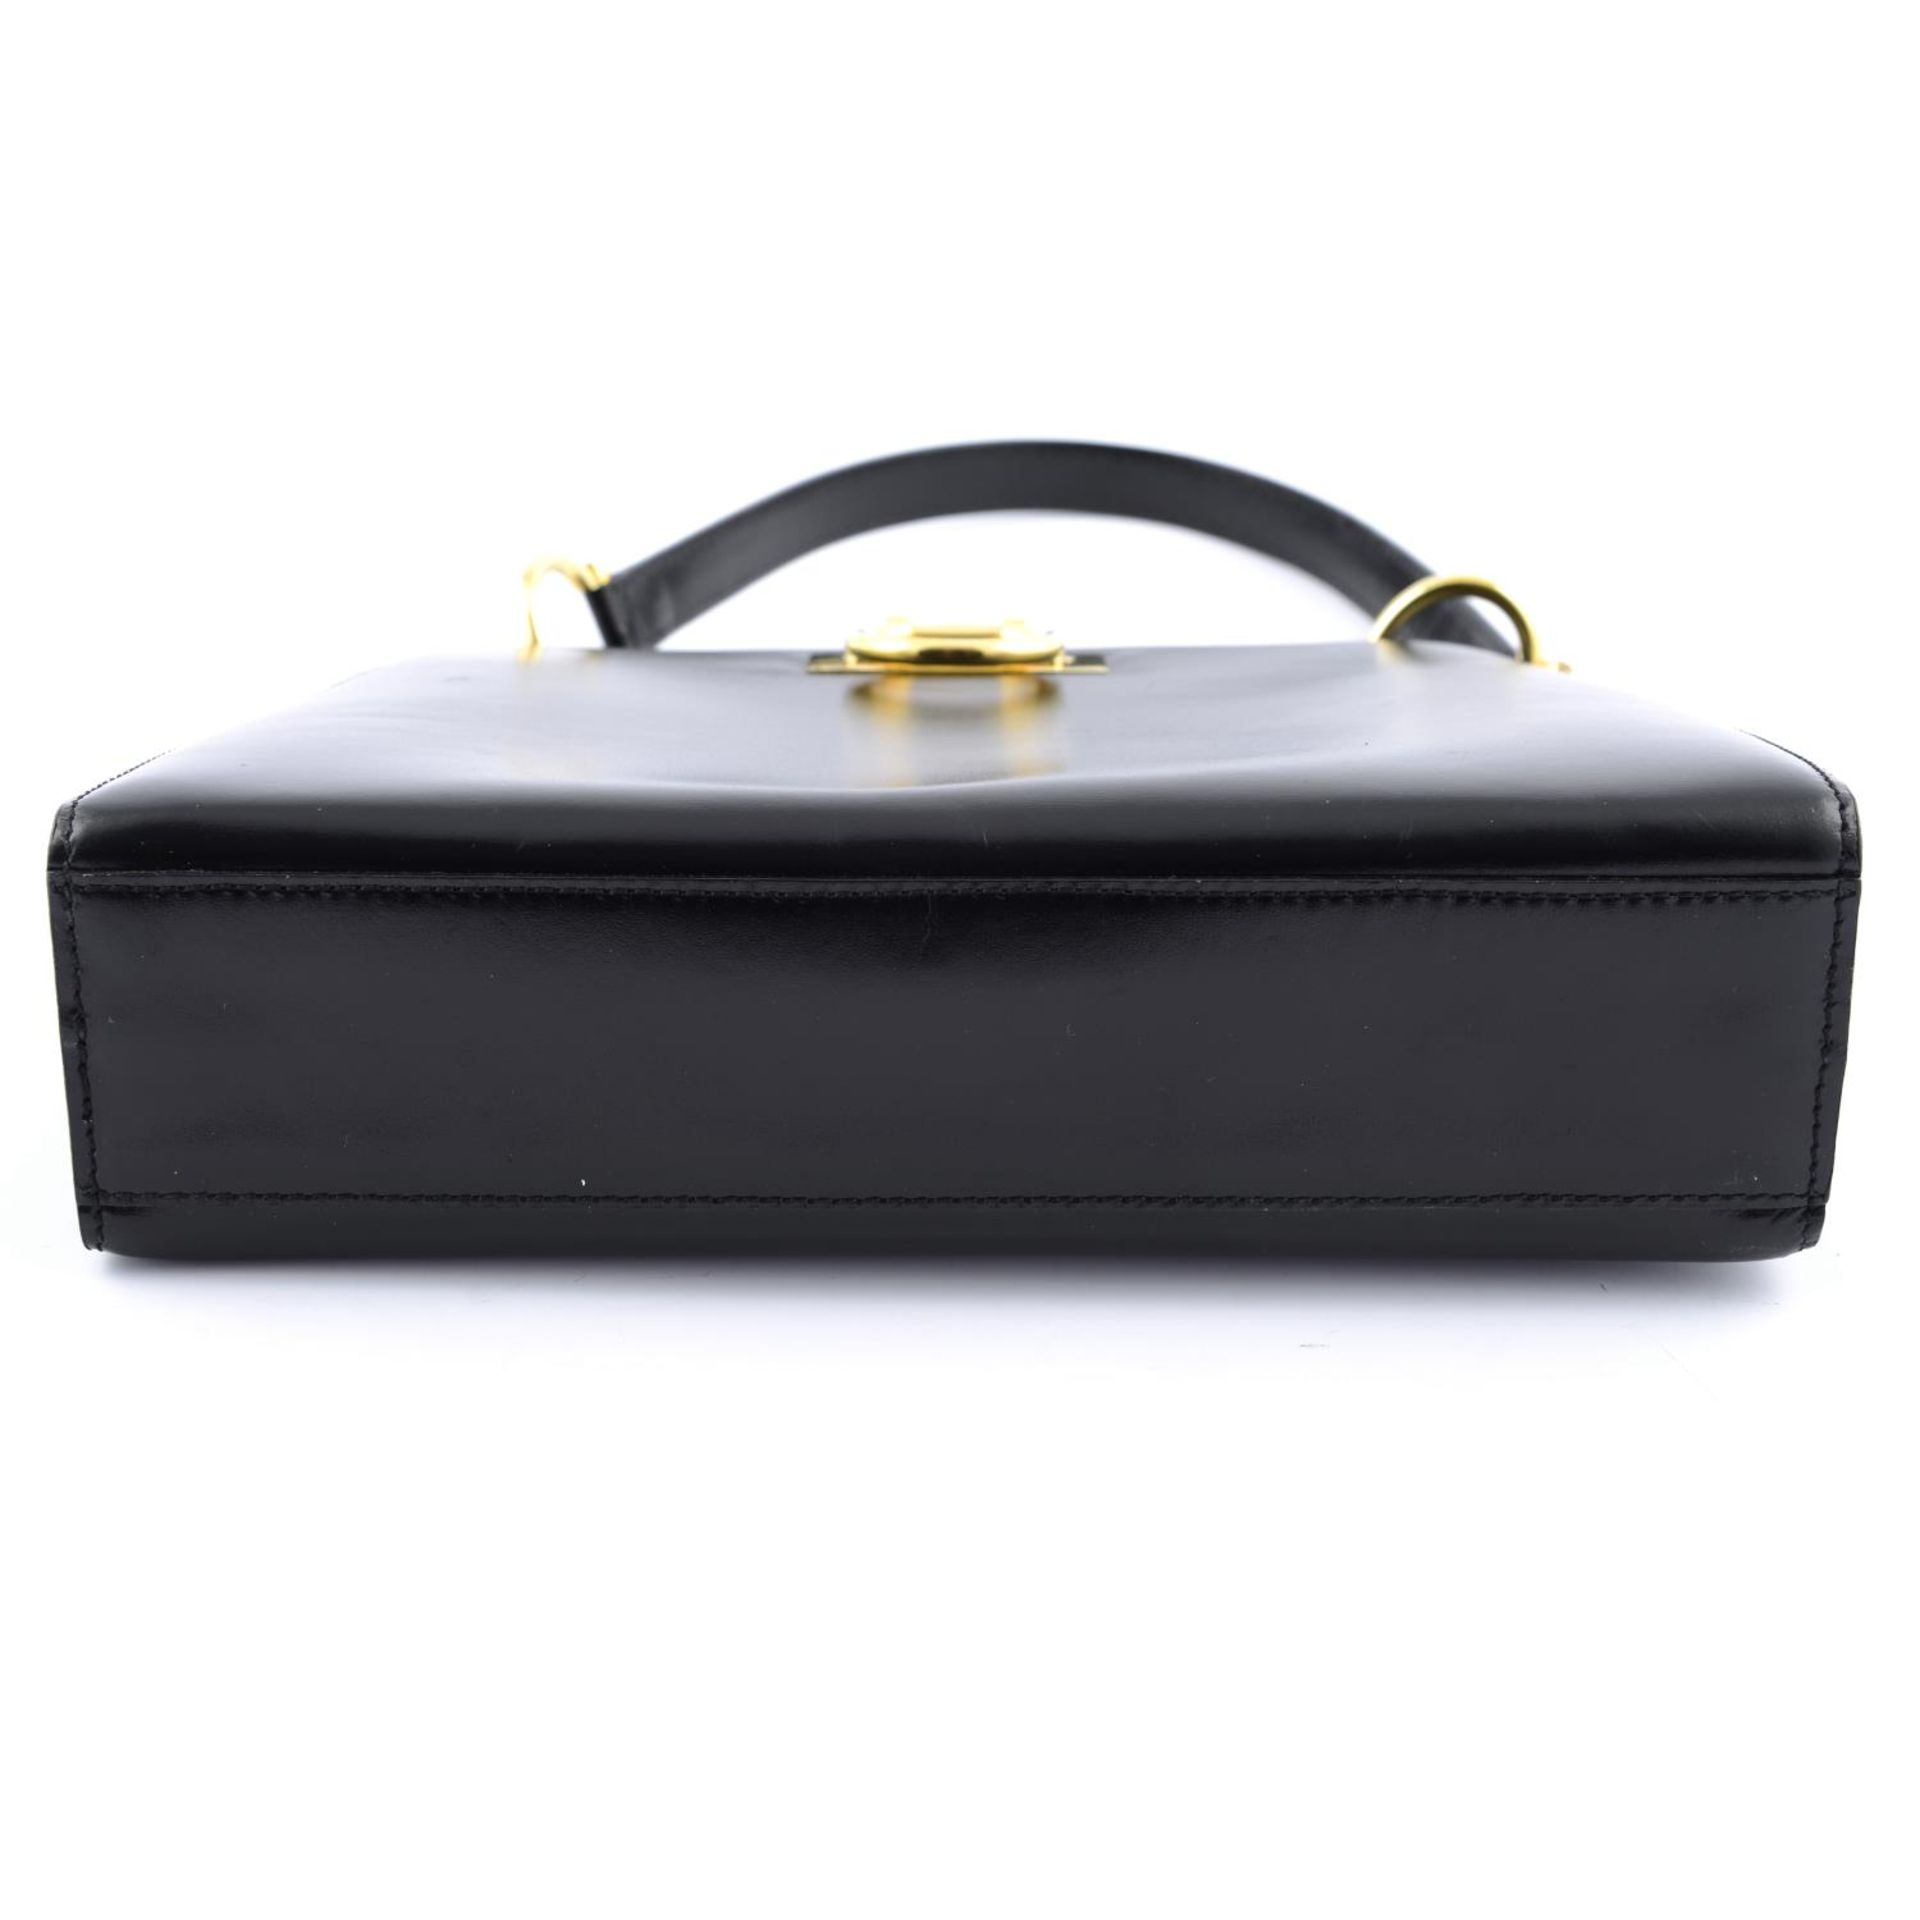 CÉLINE - a vintage handbag. - Image 6 of 6